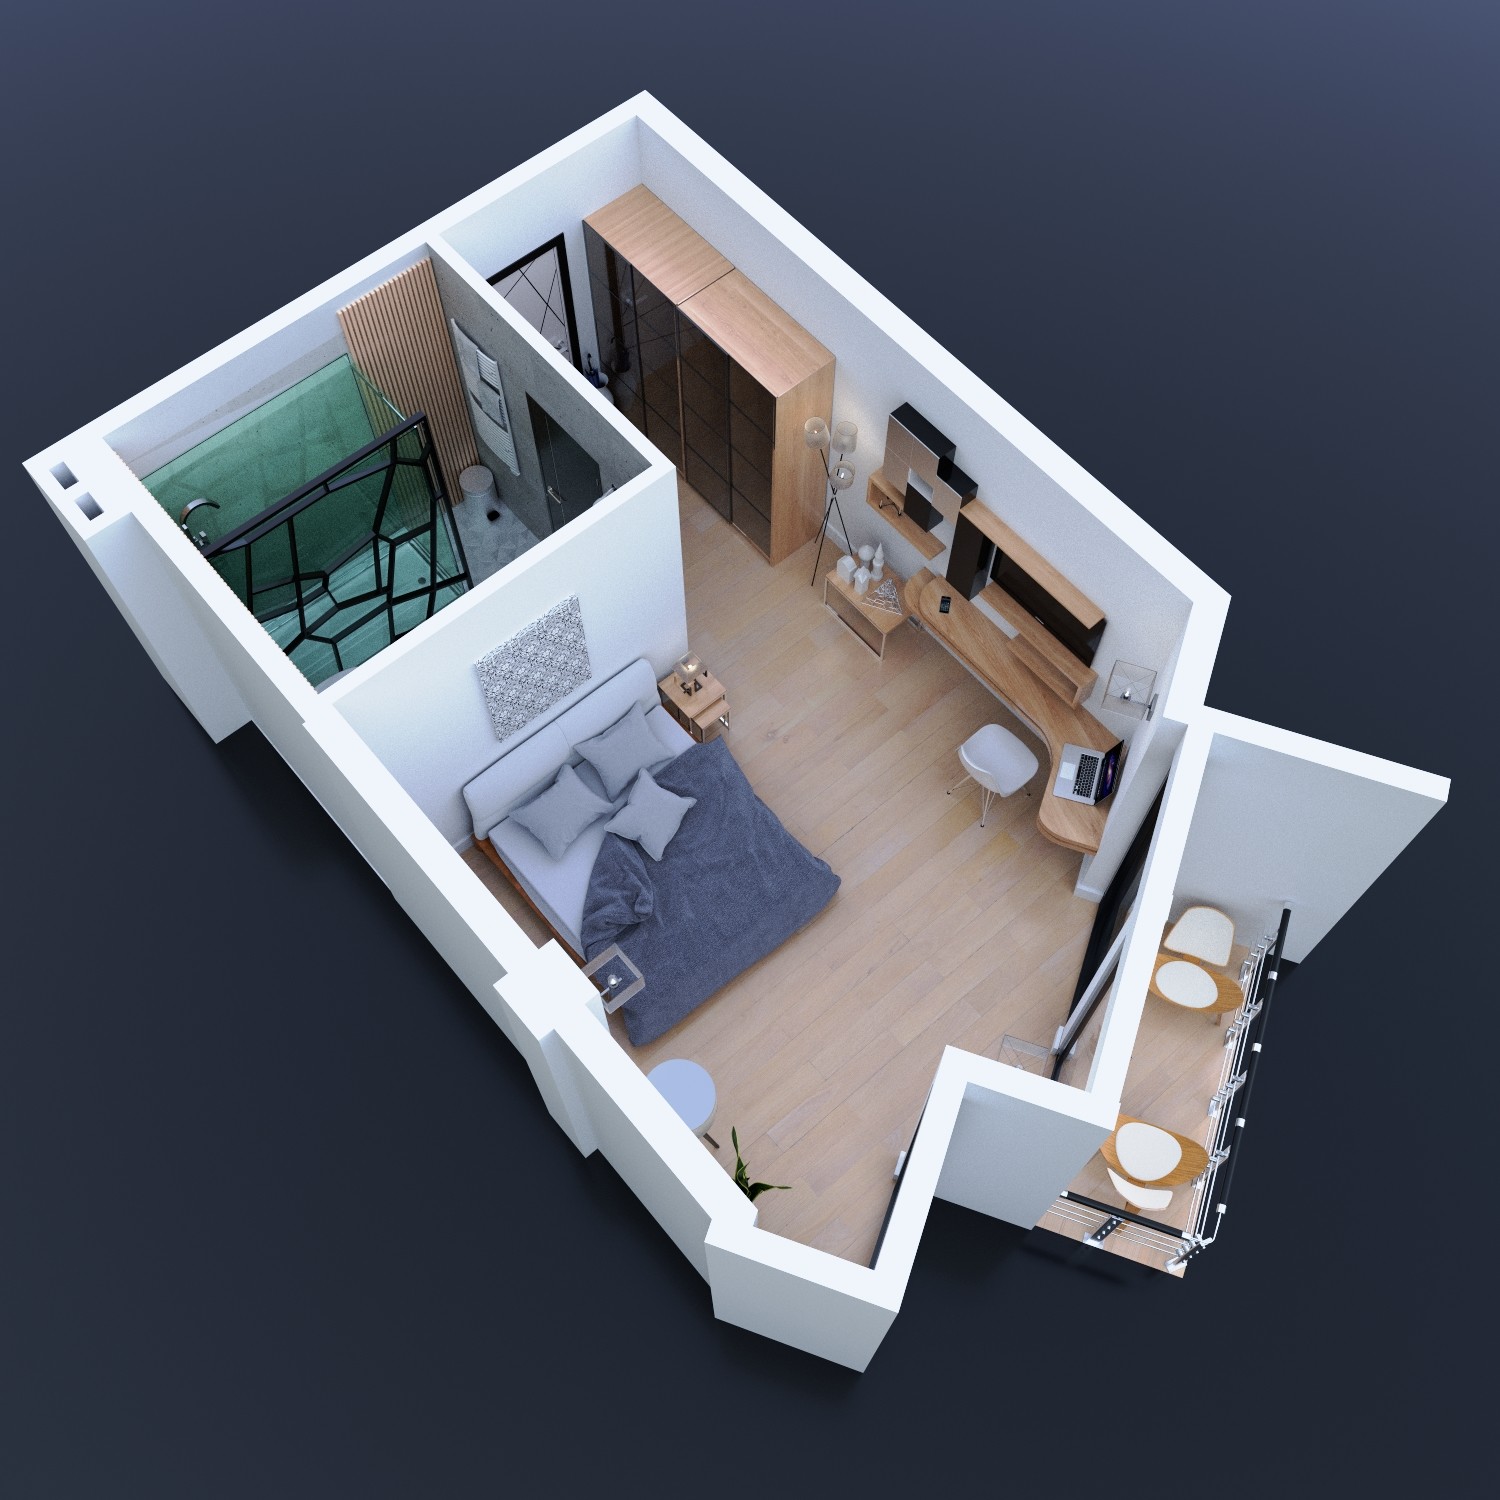 59 Home Design Plans Ground Floor 3d 100 Free 2d 3d Home